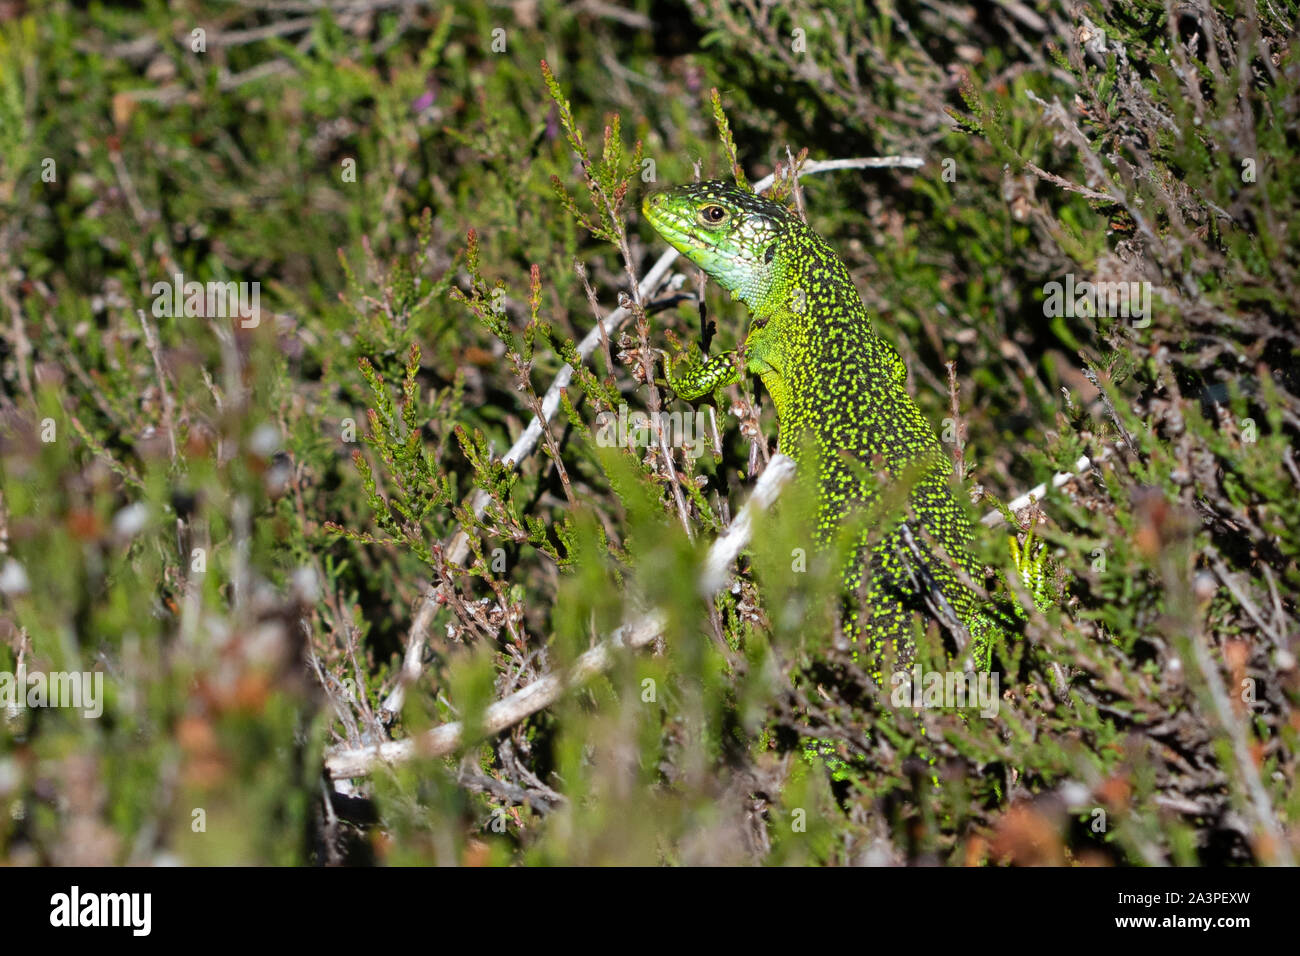 adult male Western Green Lizard (Lacerta bilineata) Stock Photo